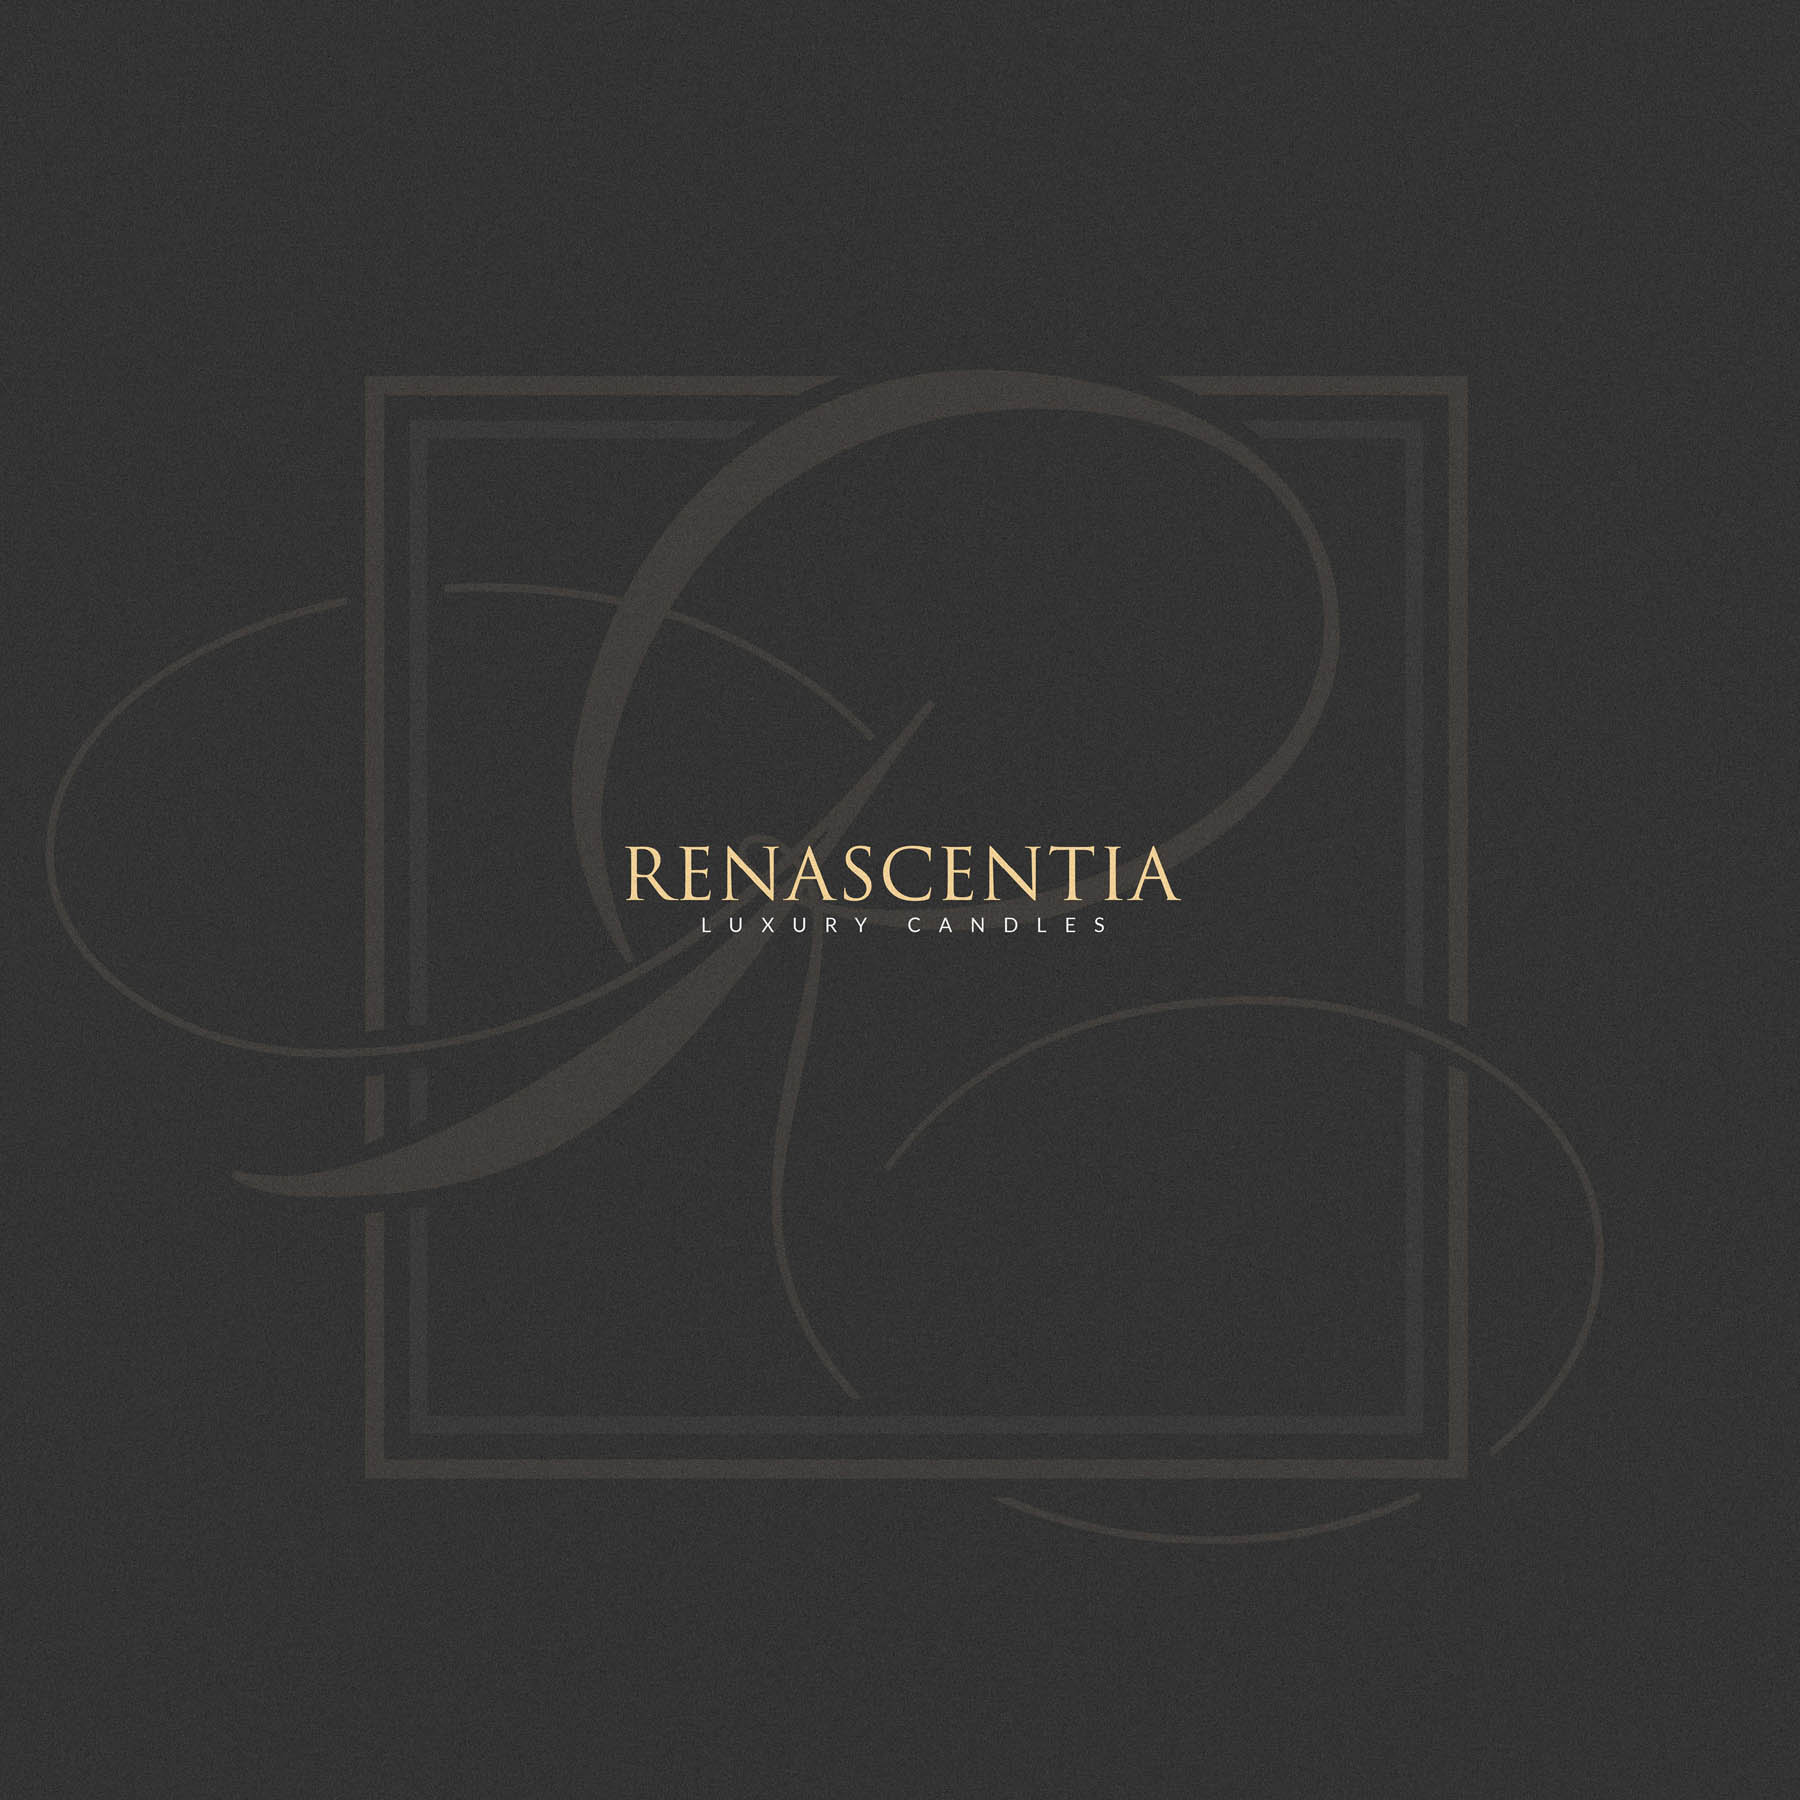 Renascentia luxury candle brand identity logo design london8